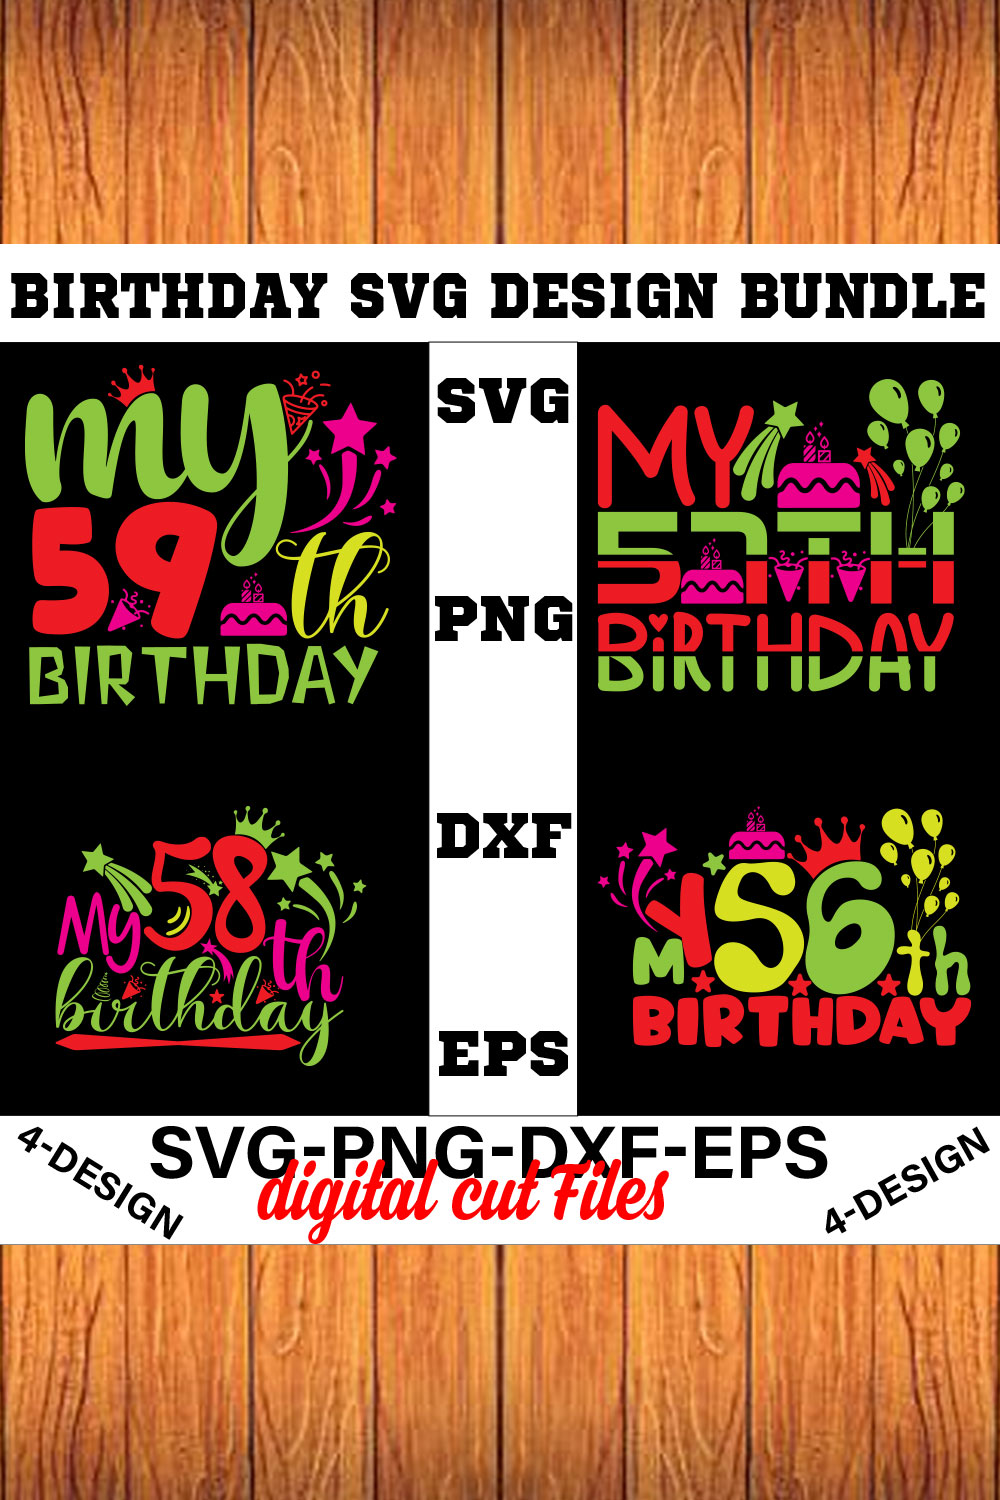 birthday svg design bundle Happy birthday svg bundle hand lettered birthday svg birthday party svg Volume-15 pinterest preview image.